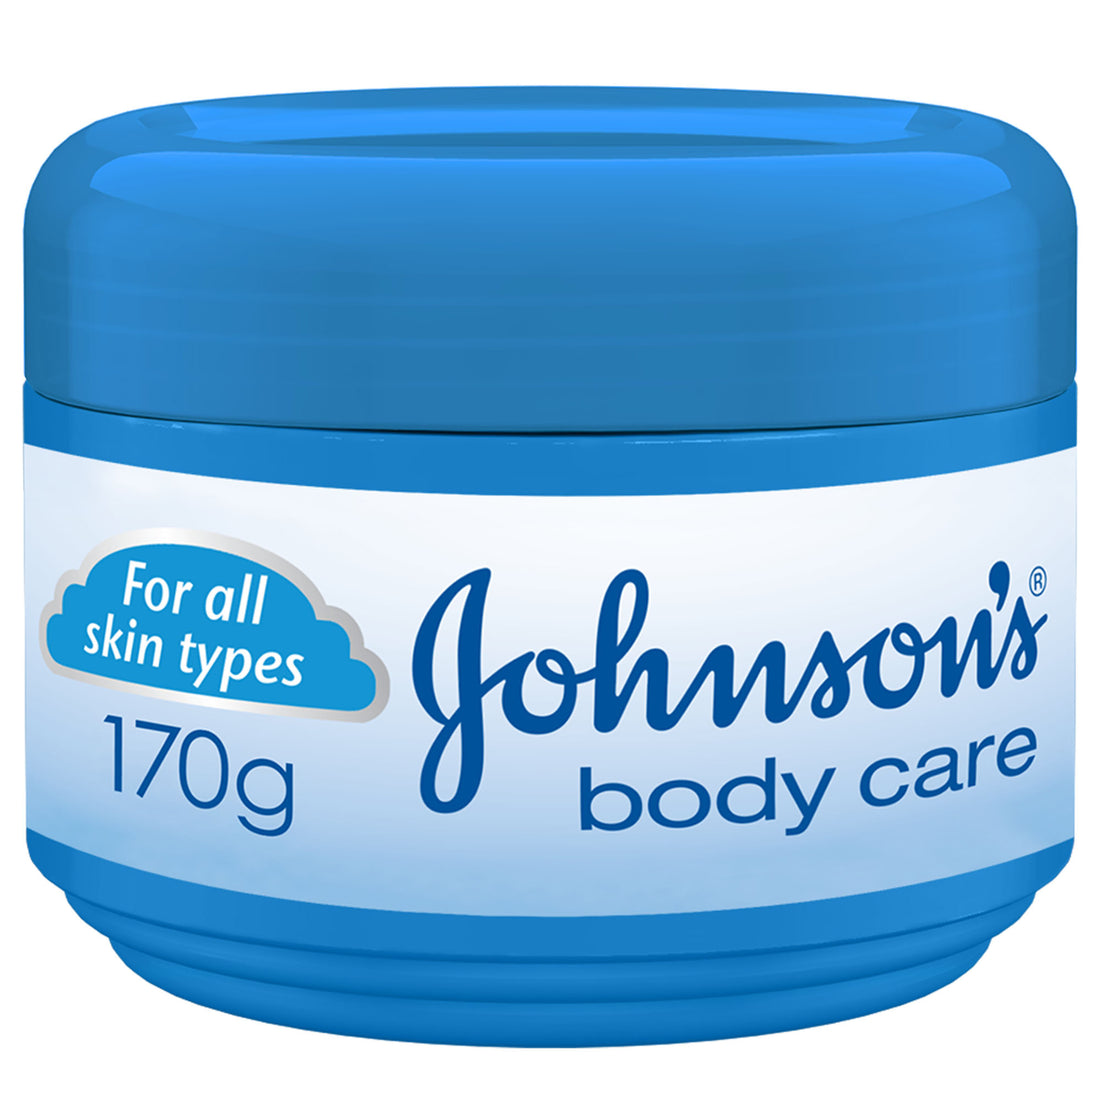 JOHNSON’S, Body Care, Moisturizing Cream, All Skin Types, 170g